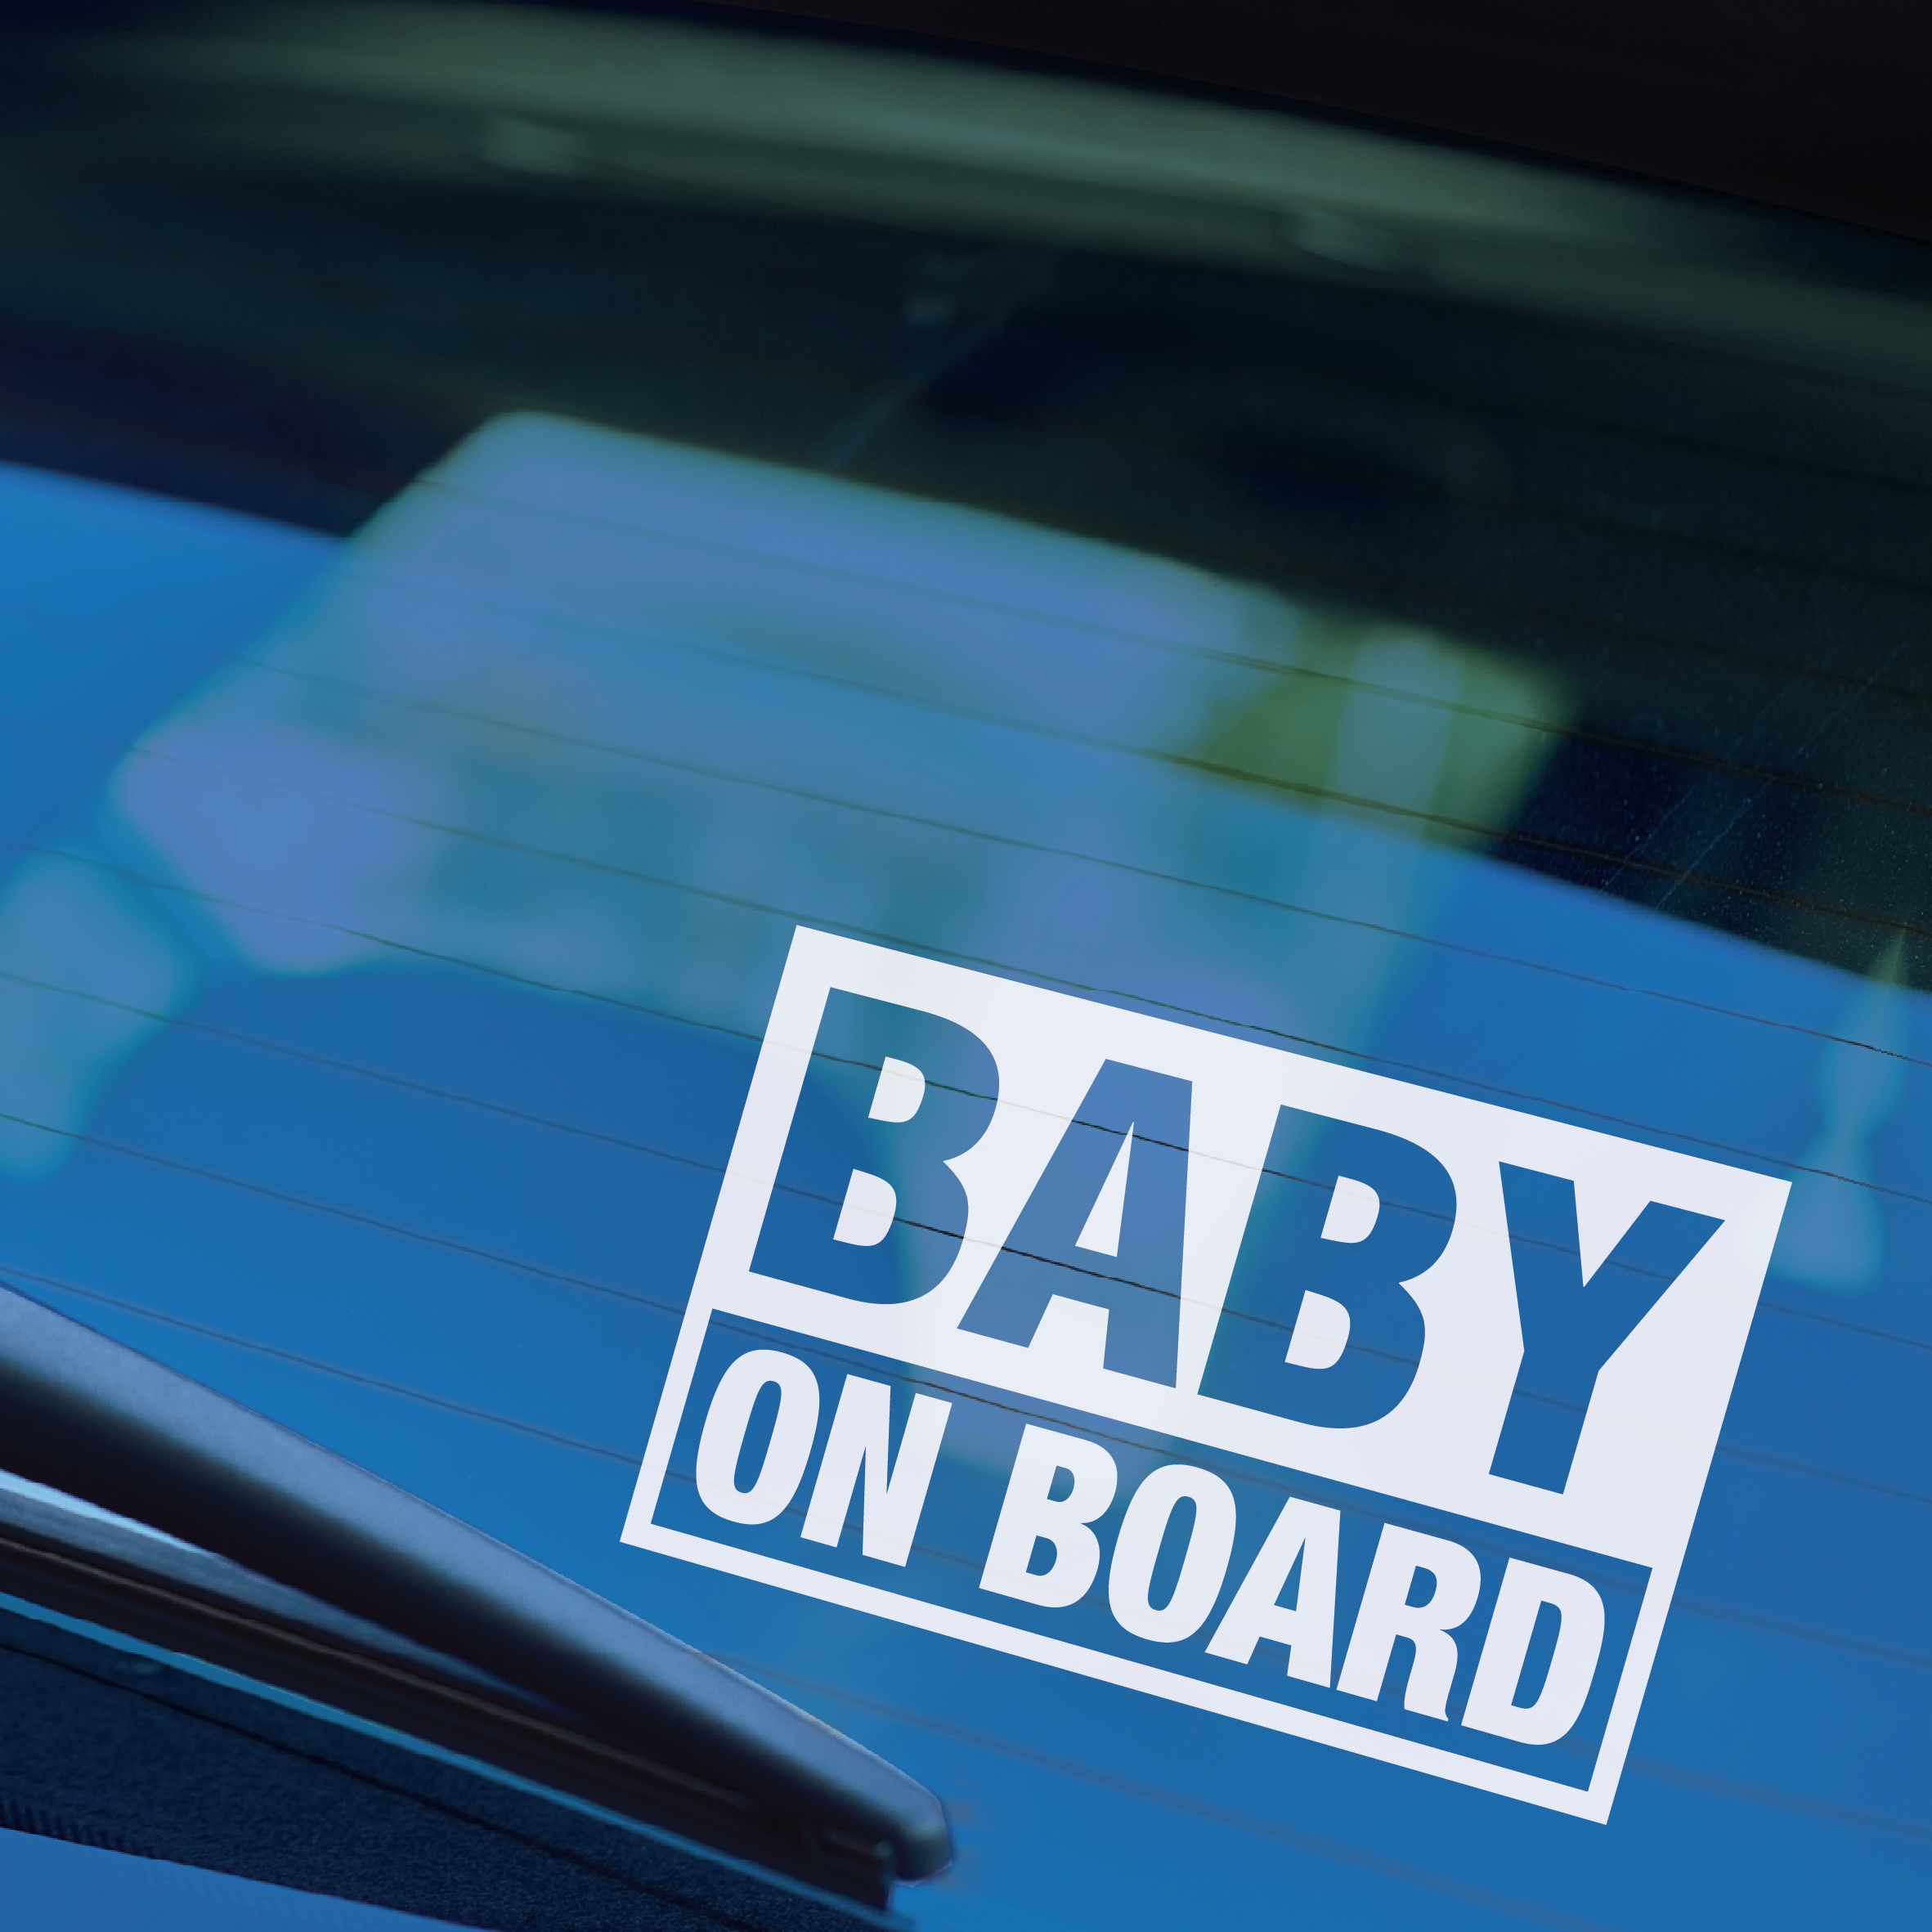 Baby on Board Car Sticker Decals